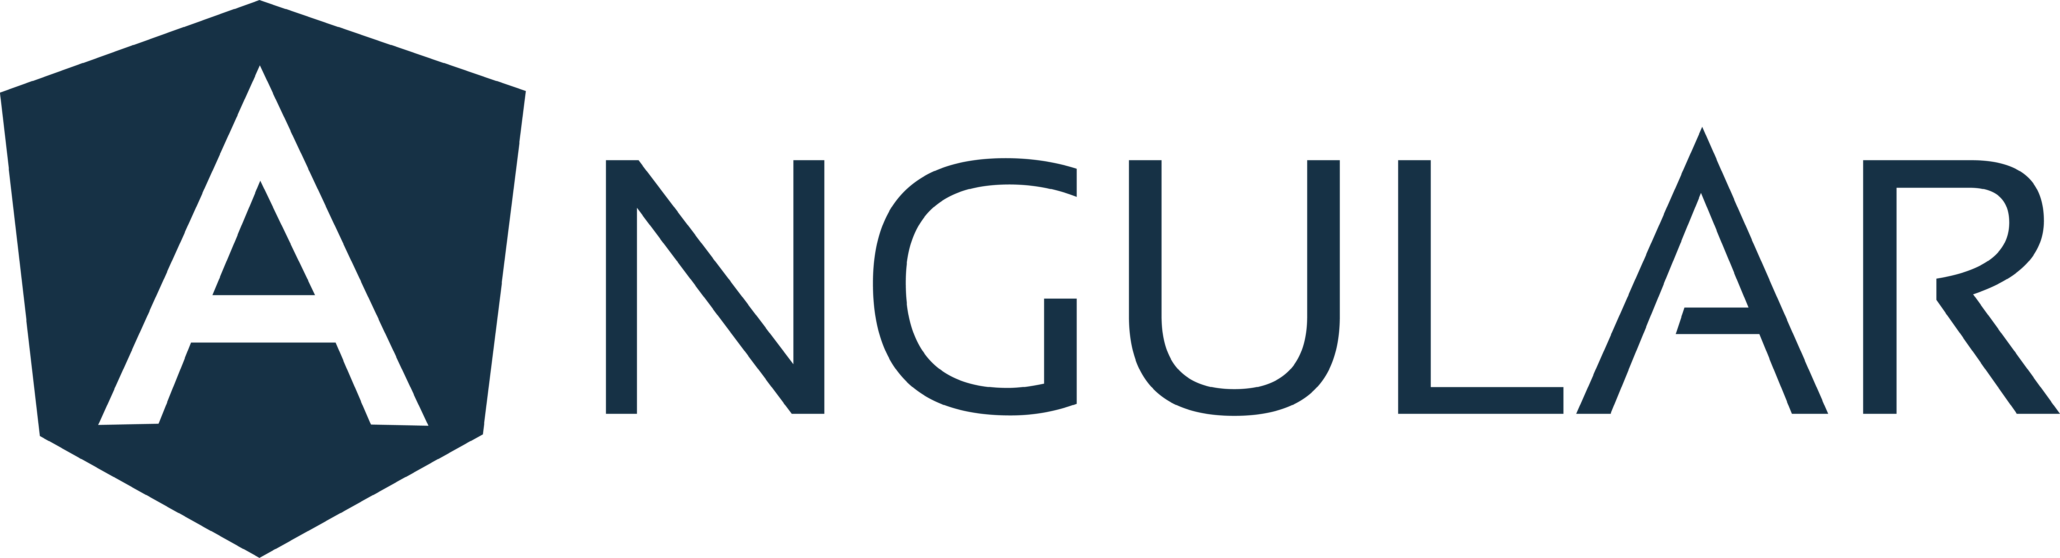 AngularJS logo in navy